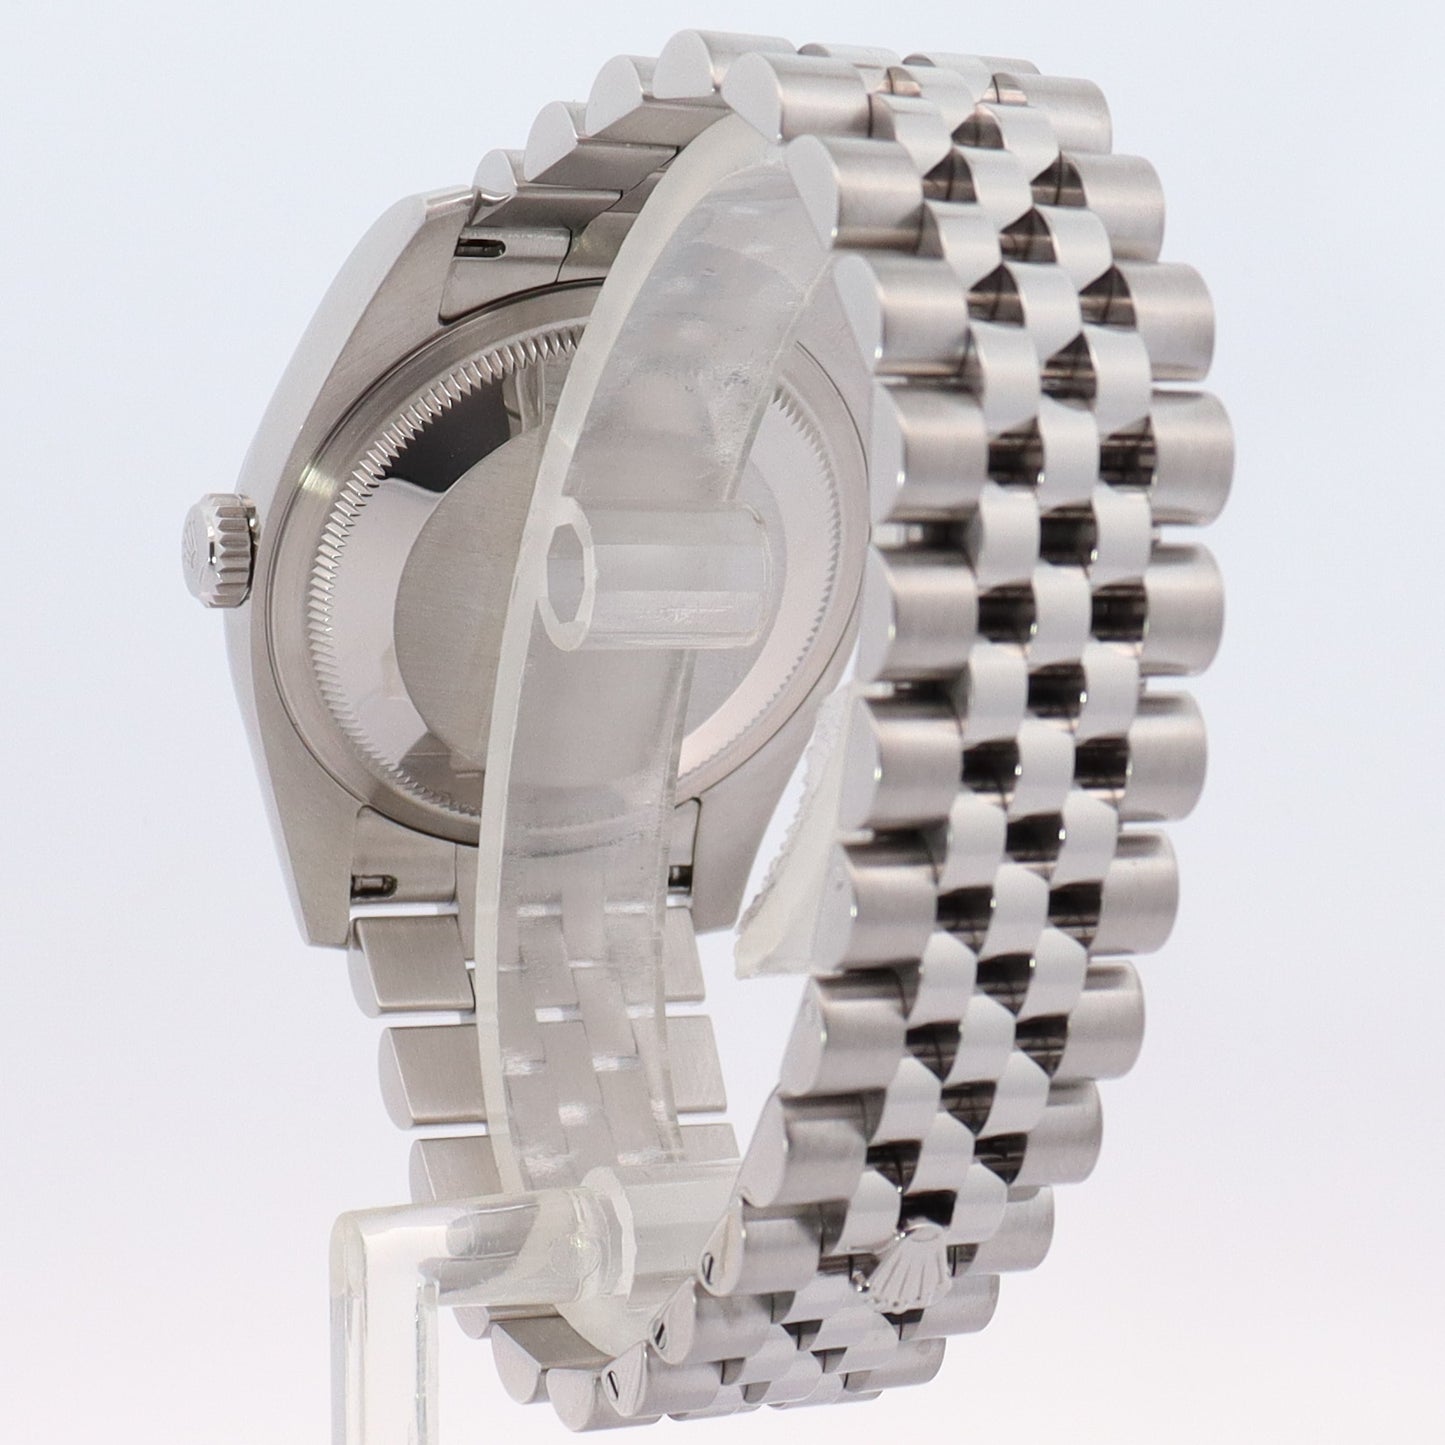 Rolex Datejust Stainless Steel 36mm White Stick Dial Watch Reference# 116200 - Happy Jewelers Fine Jewelry Lifetime Warranty